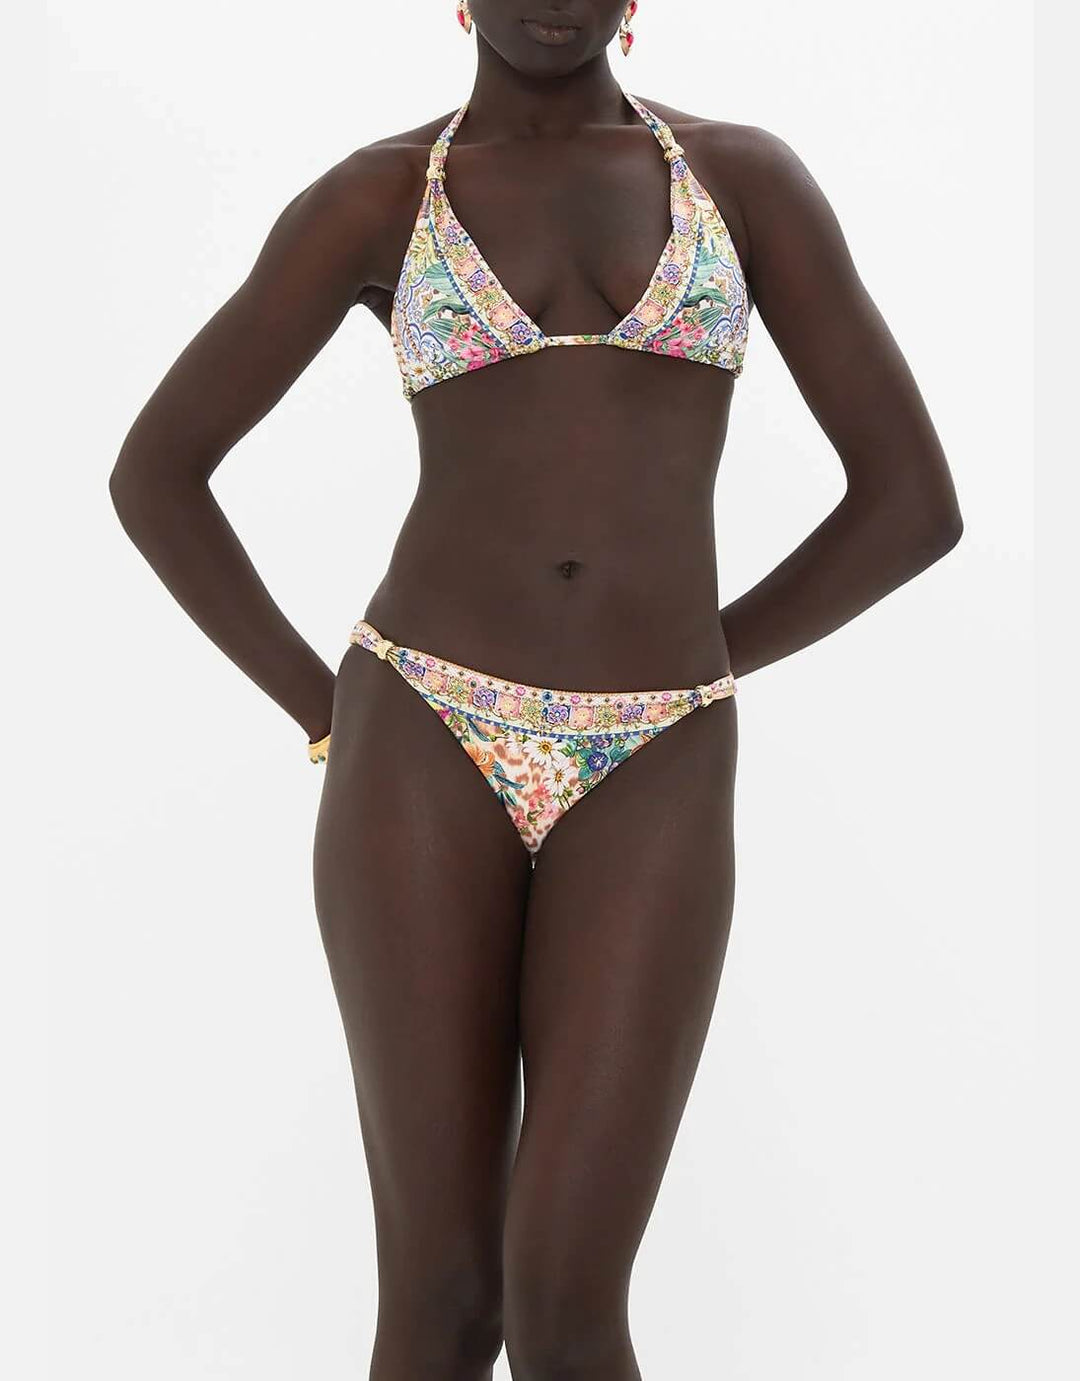 MSNR Wonder string bikini by maison-aria - Bikinis - Afrikrea